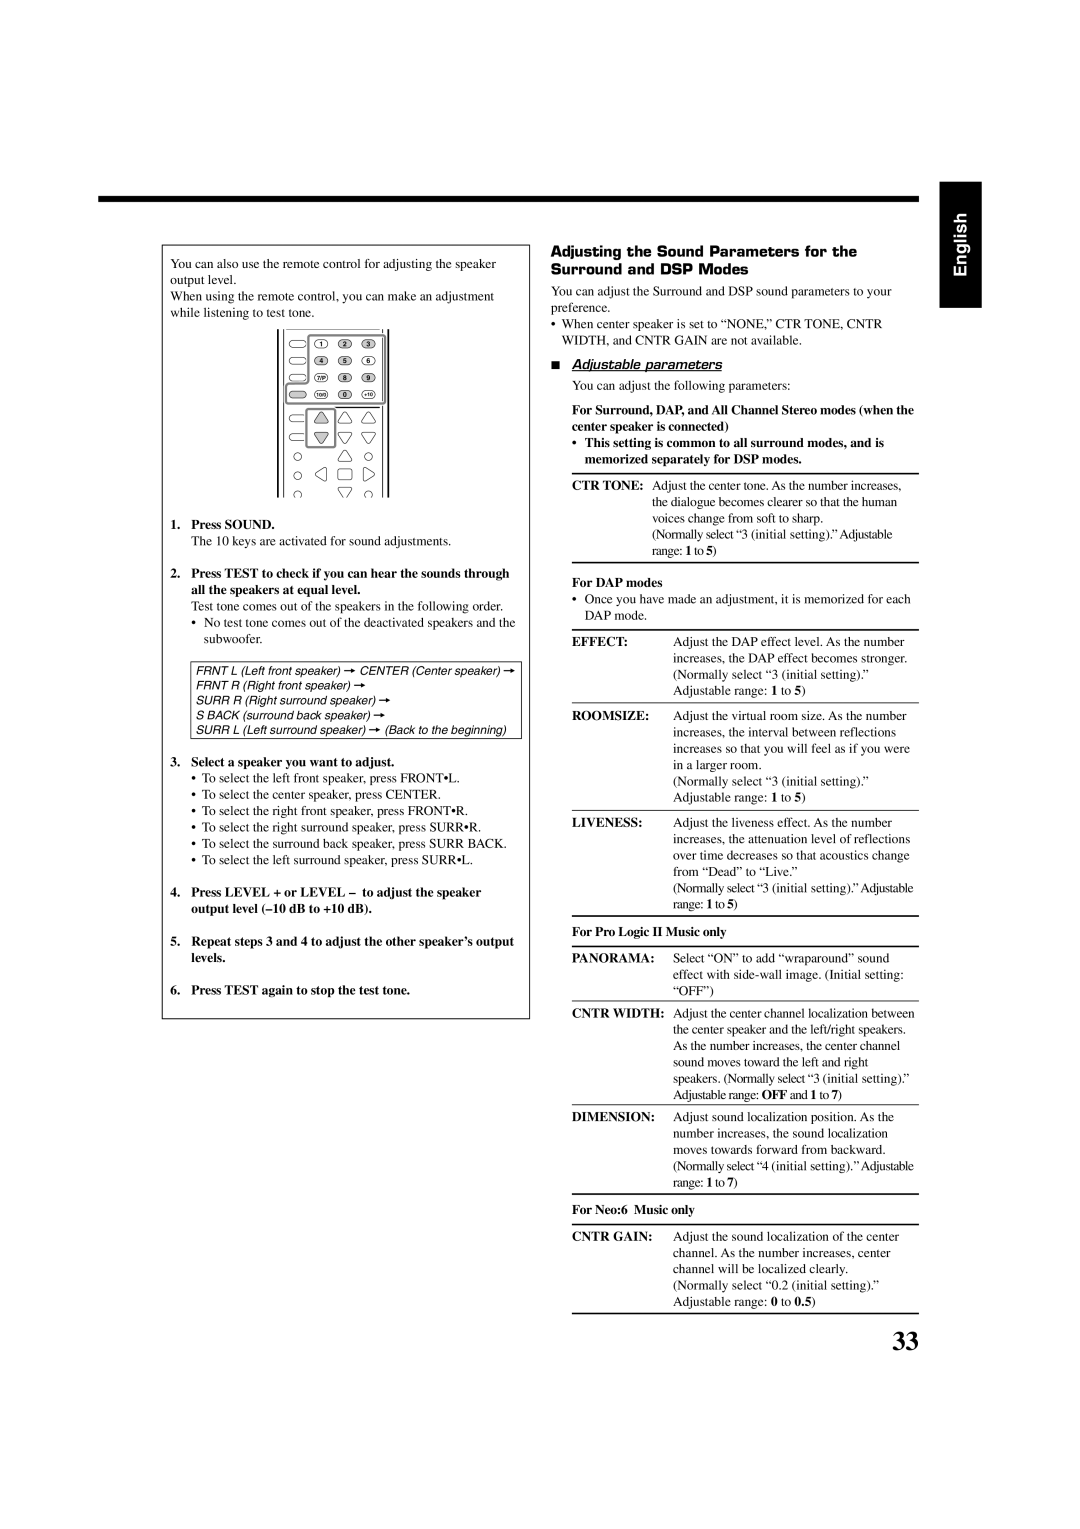 JVC RX7030VBK manual English, 7Adjustable parameters 